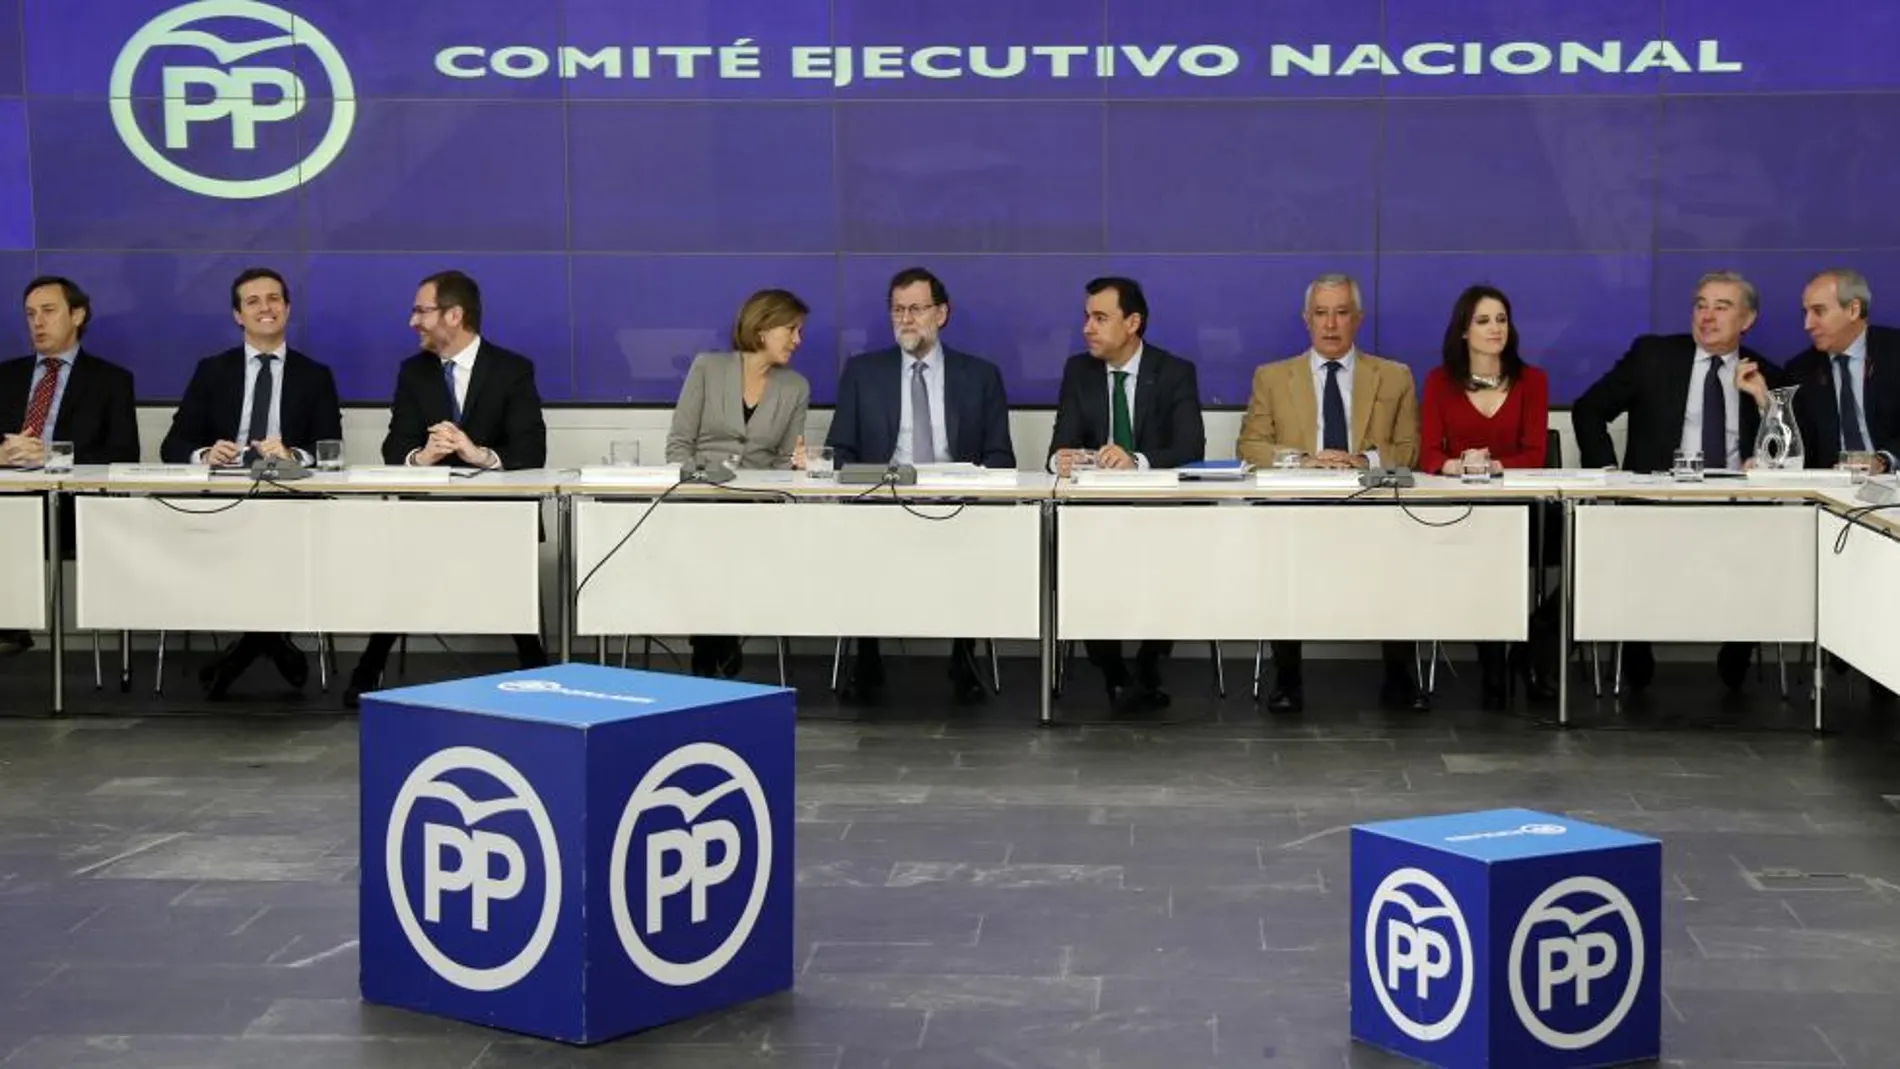 Reunión del Comité Ejecutivo Nacional del PP en la sede de la calle Génova